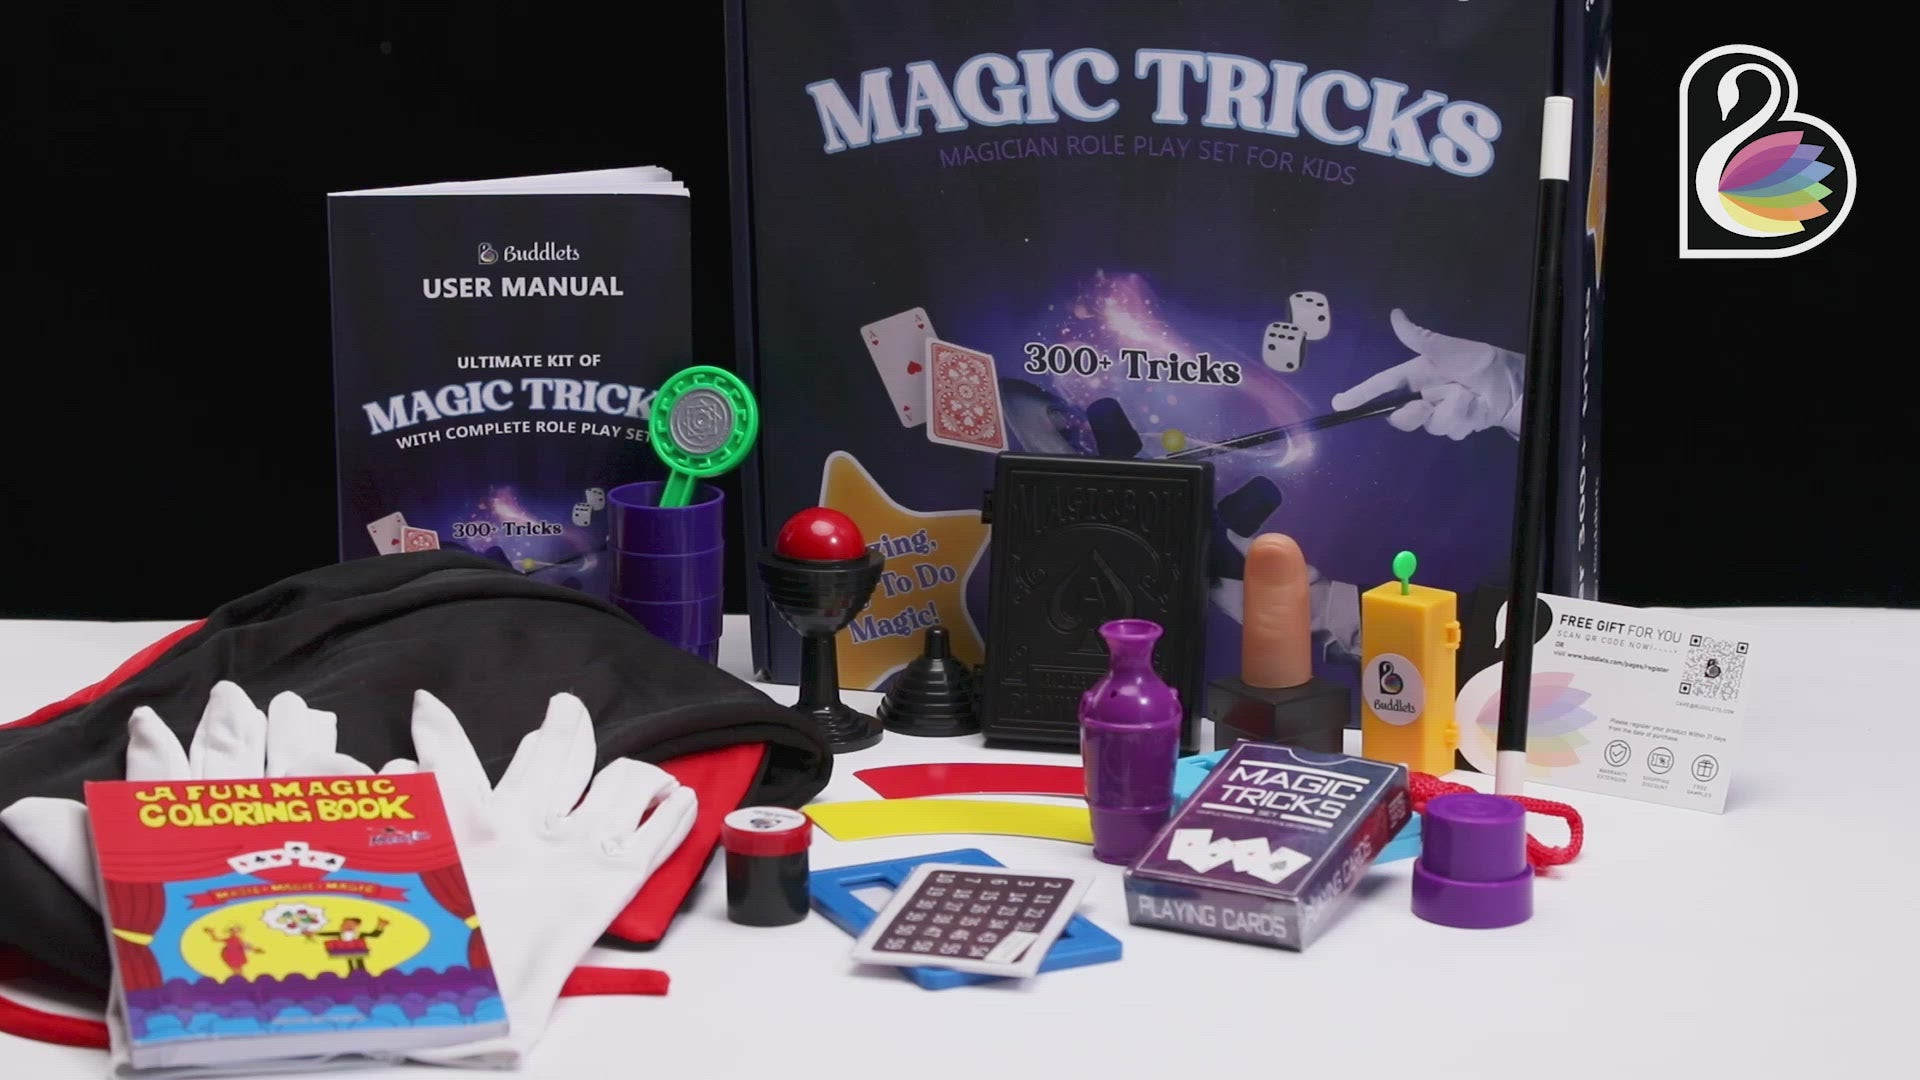 magic tricks for kids videos